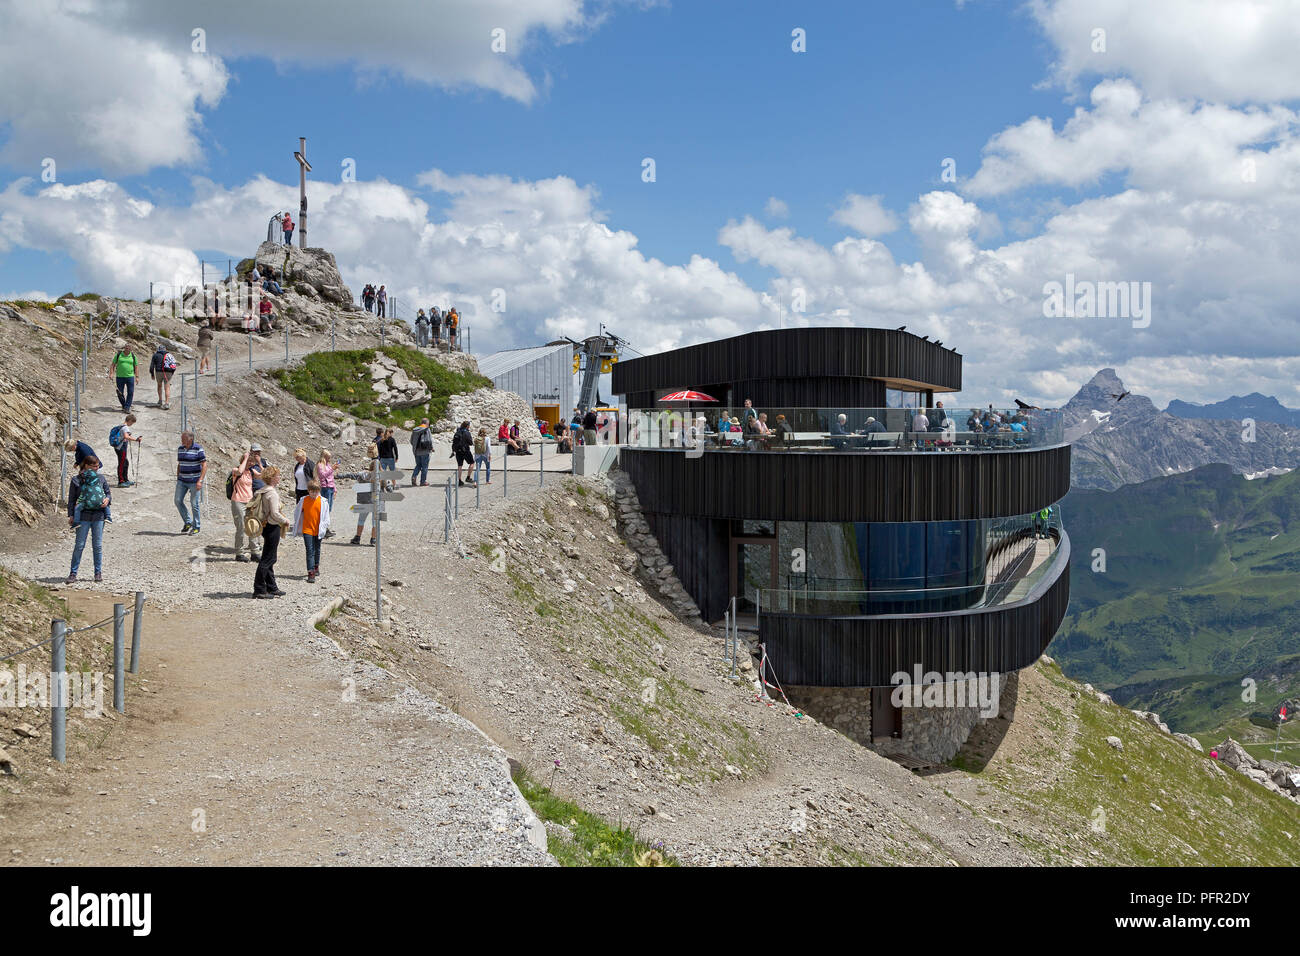 https://c8.alamy.com/comp/PFR2DY/summit-station-of-nebelhornbahn-nebelhorn-oberstdorf-allgaeu-bavaria-germany-PFR2DY.jpg